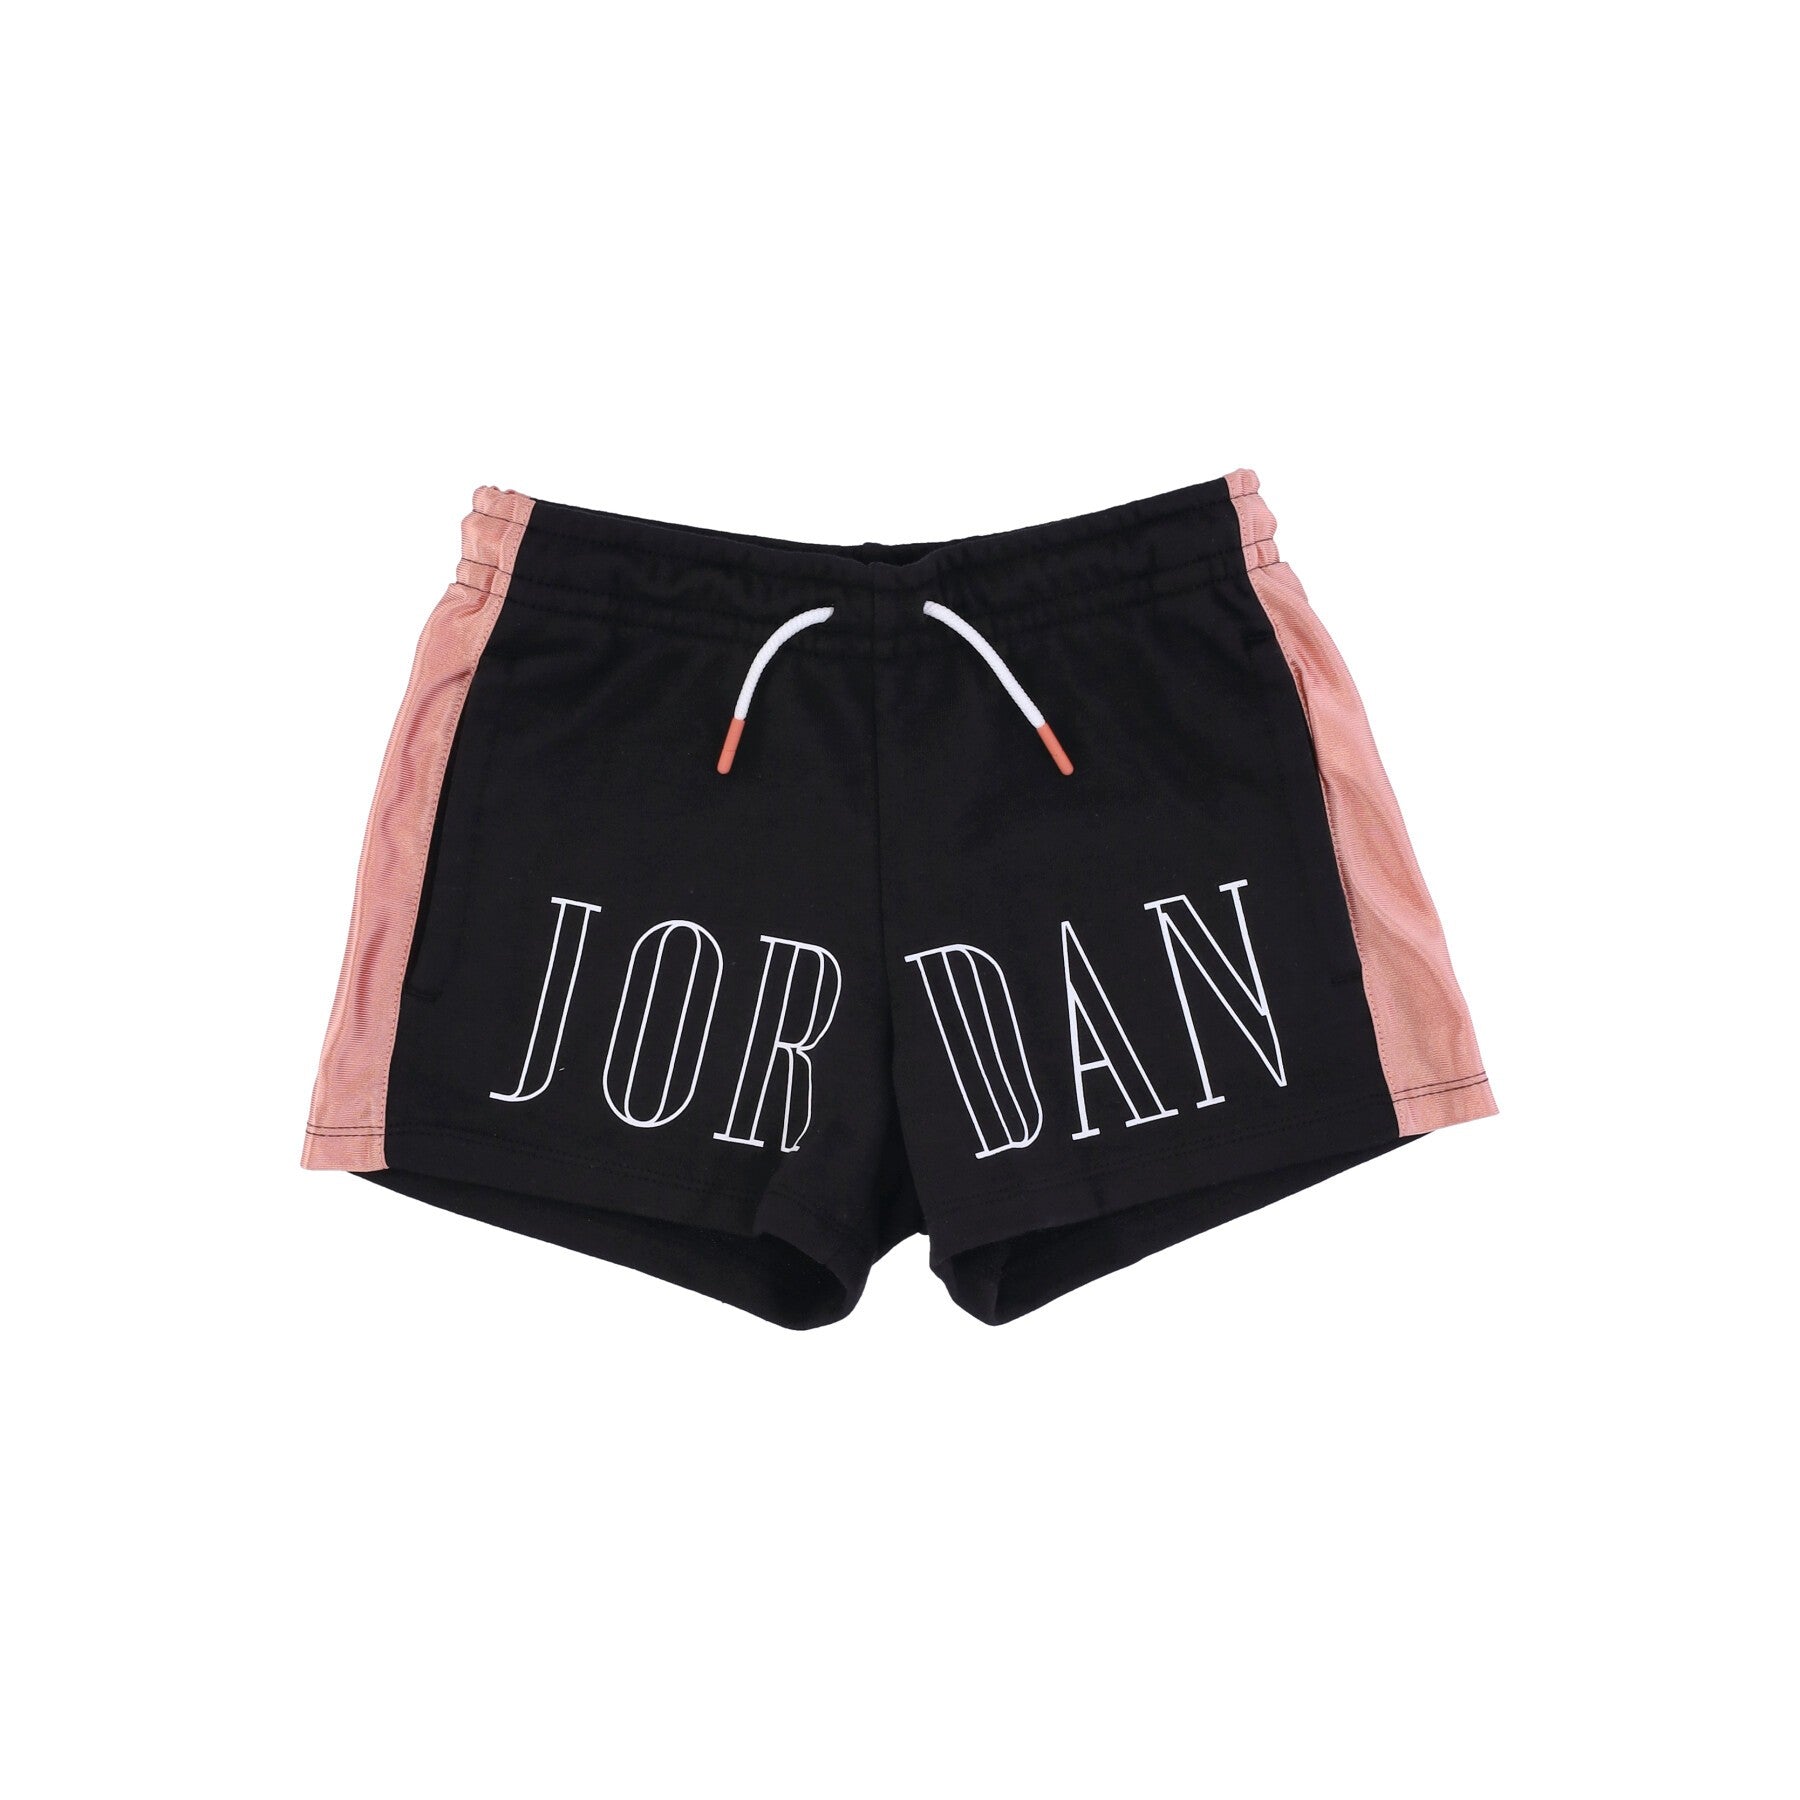 Jordan, Pantaloncino Ragazza Pink Satin Ft Shorts, Black